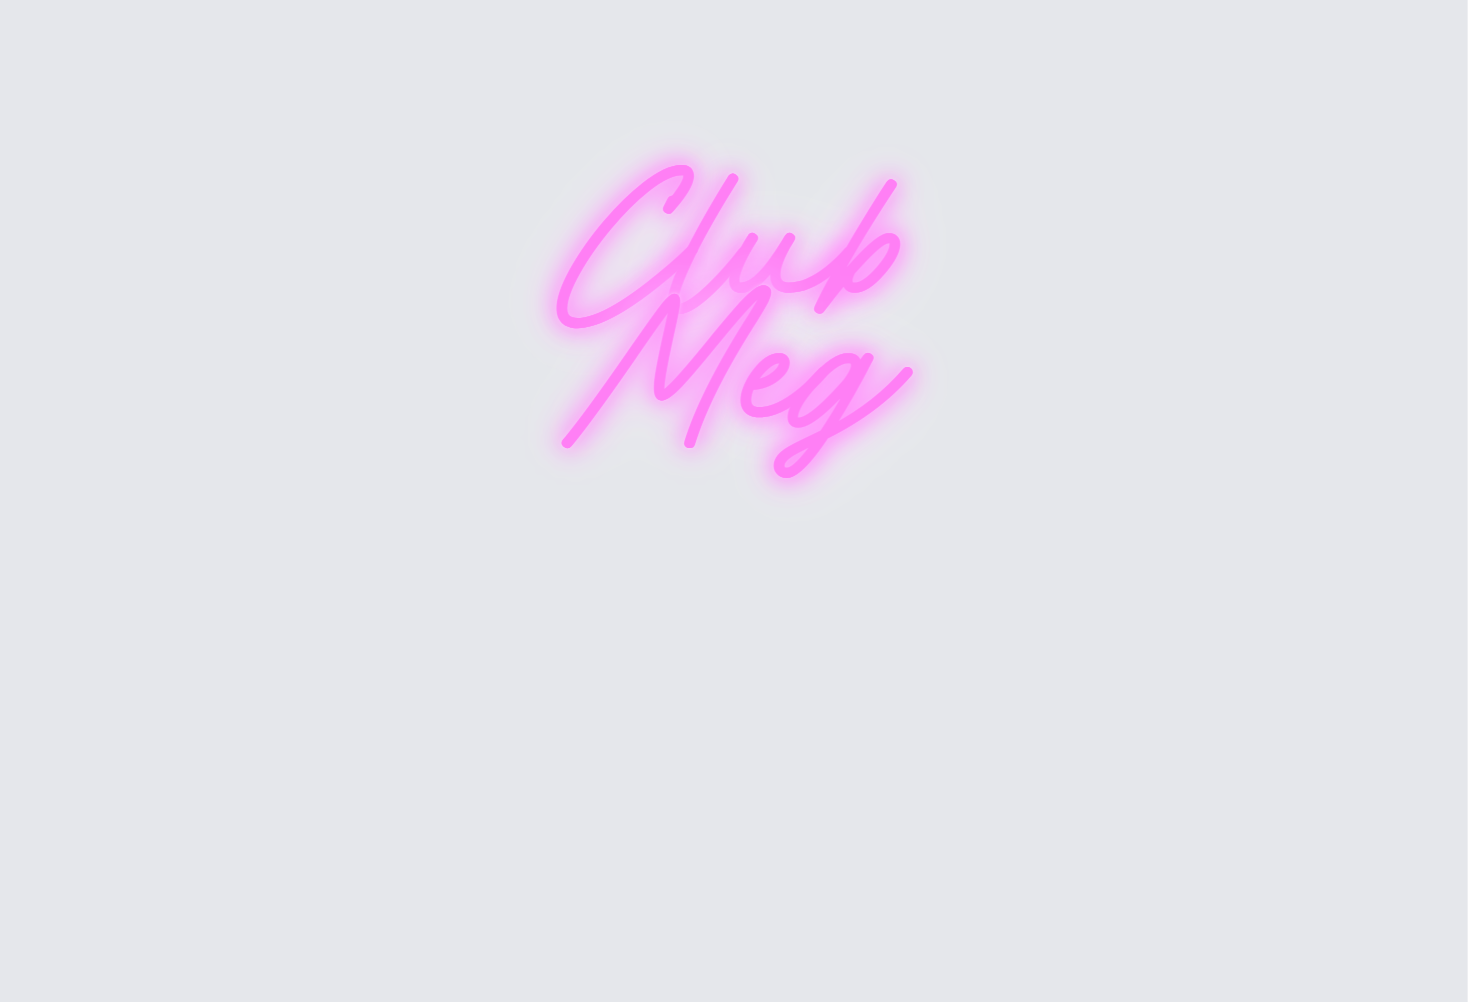 Custom neon sign - Club Meg